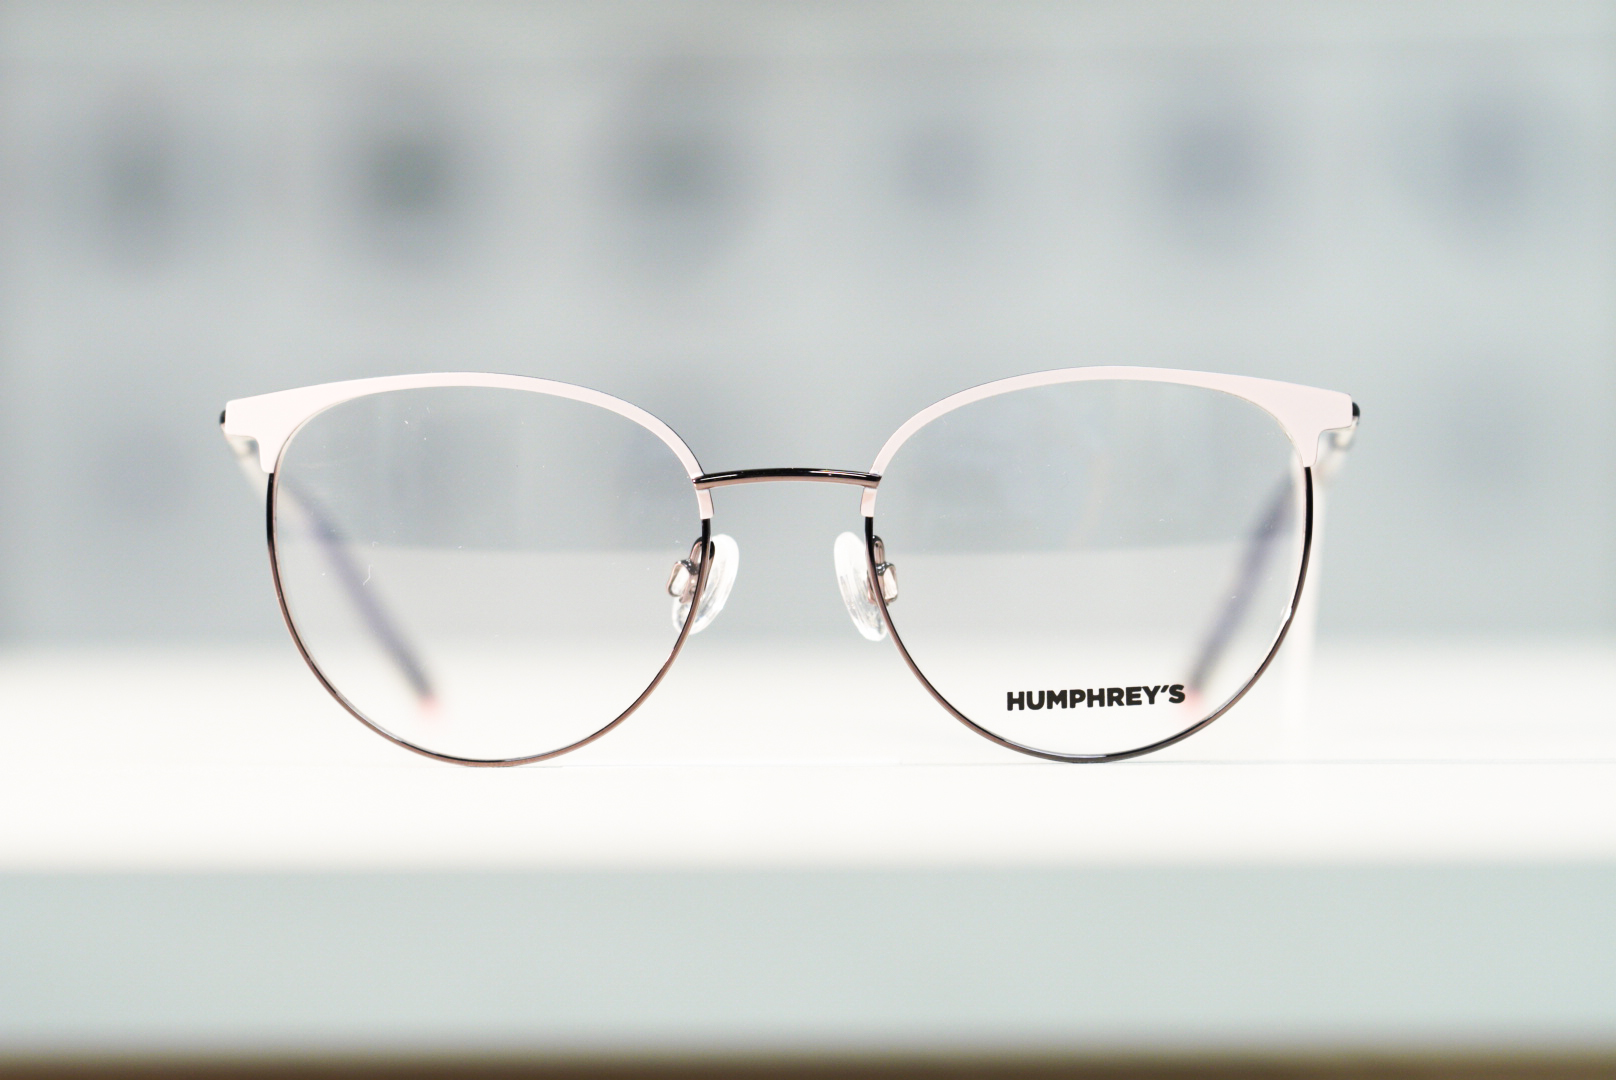 Humphreys glasses